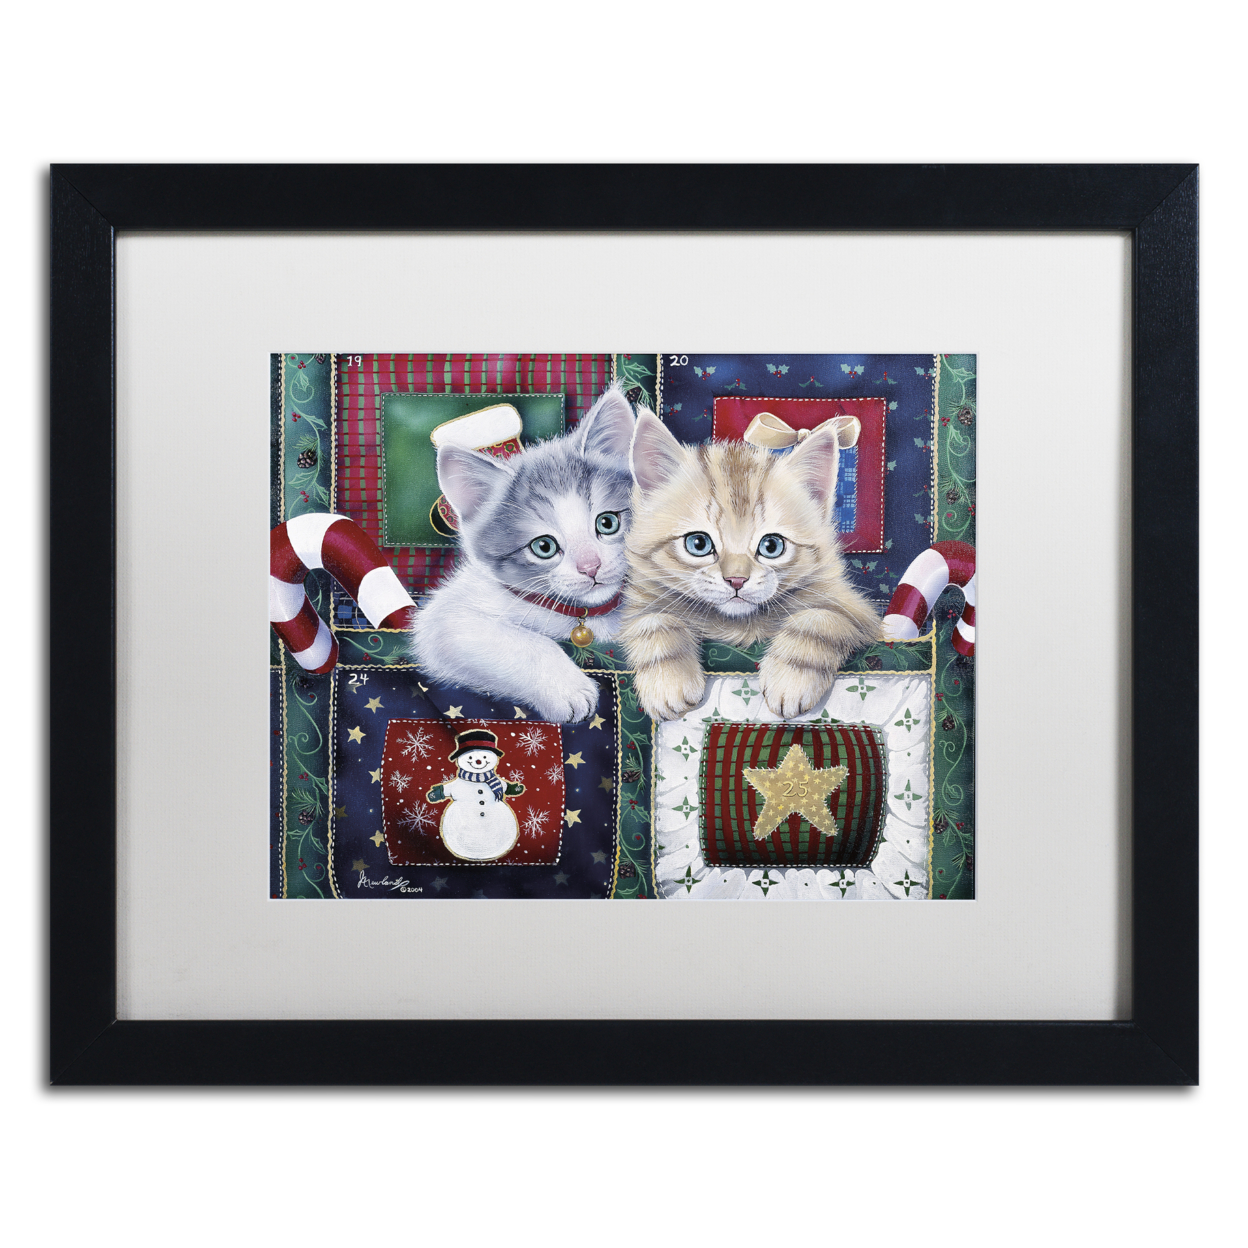 Jenny Newland 'Christmas Calendar Kittens' Black Wooden Framed Art 18 X 22 Inches